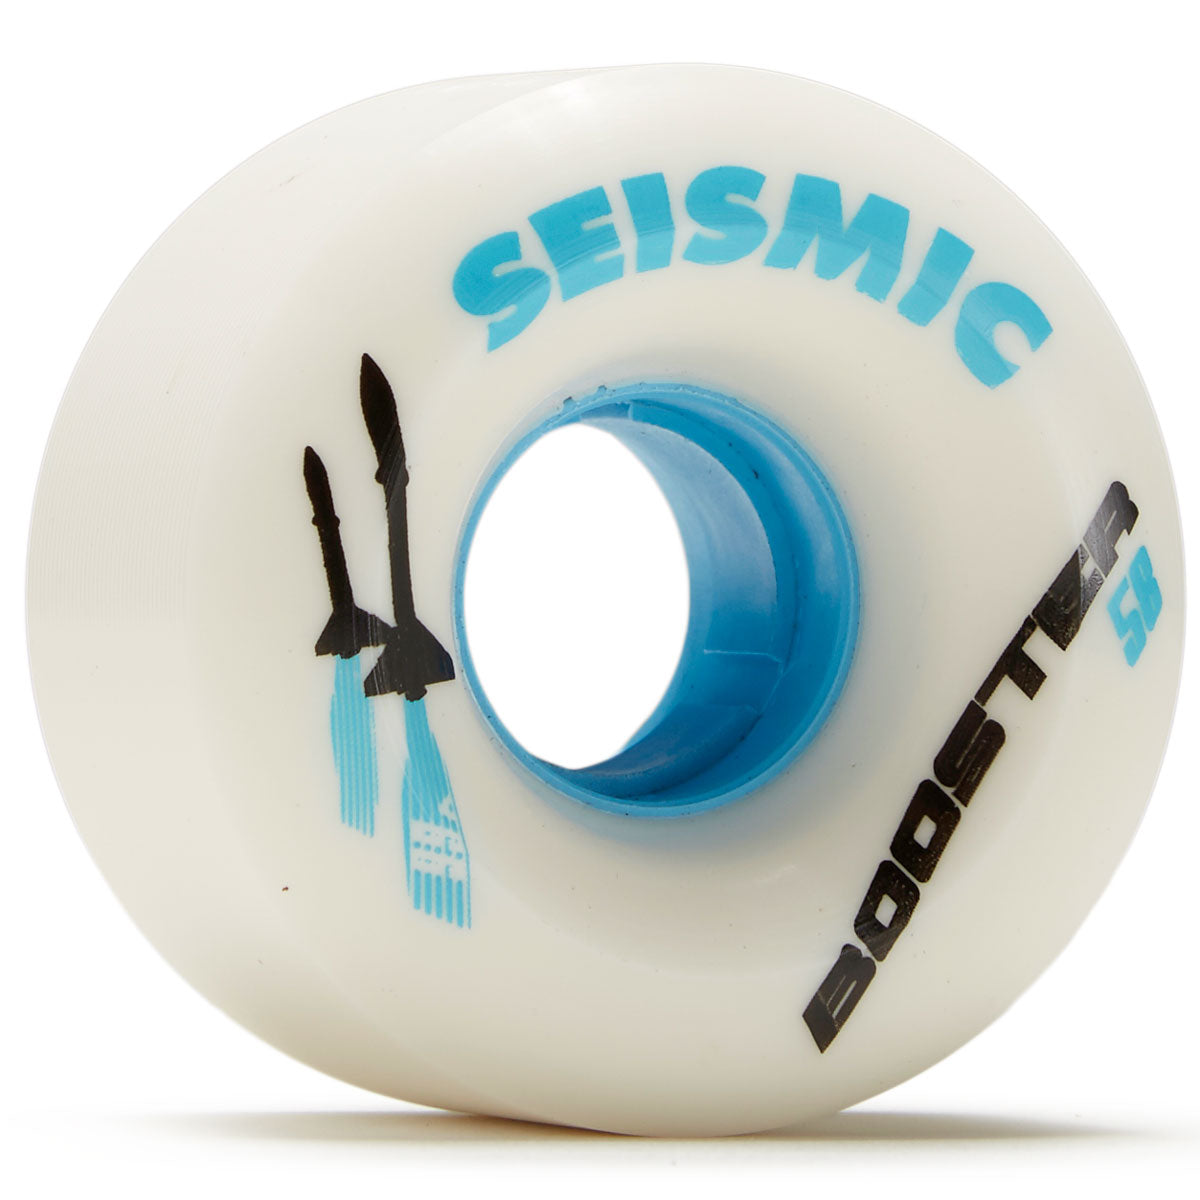 Seismic Booster 99a Longboard Wheels - White/Blue - 58mm image 1